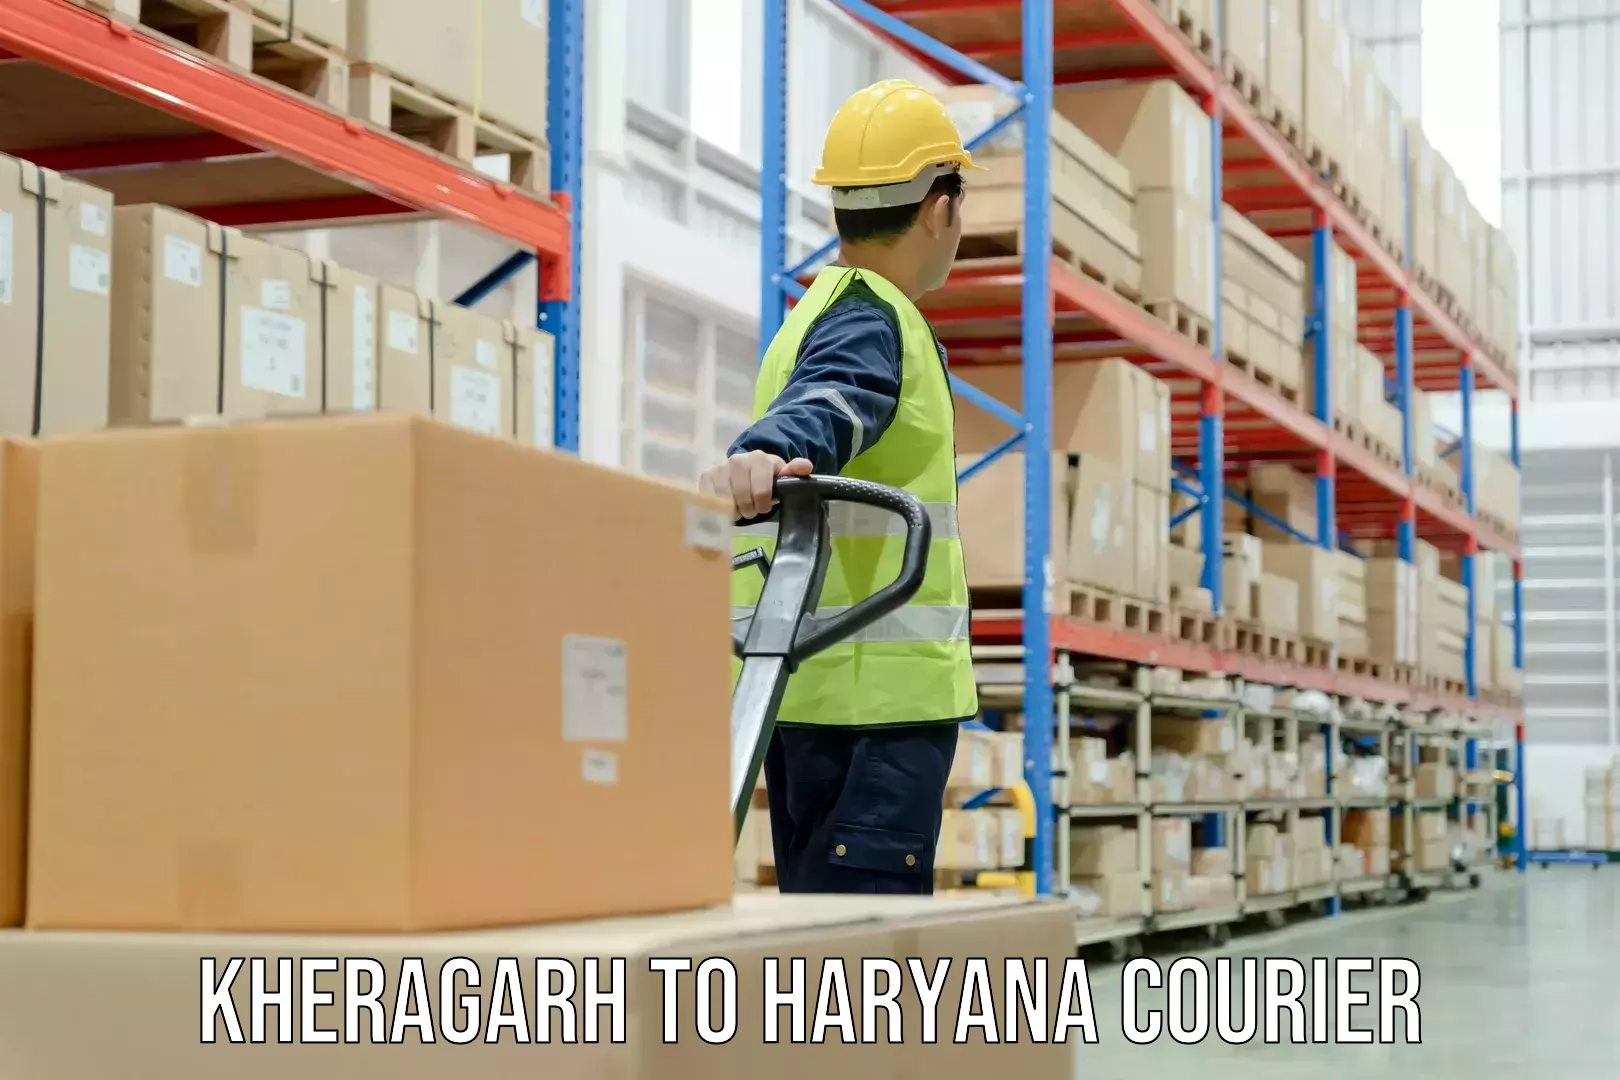 Courier service partnerships Kheragarh to Haryana